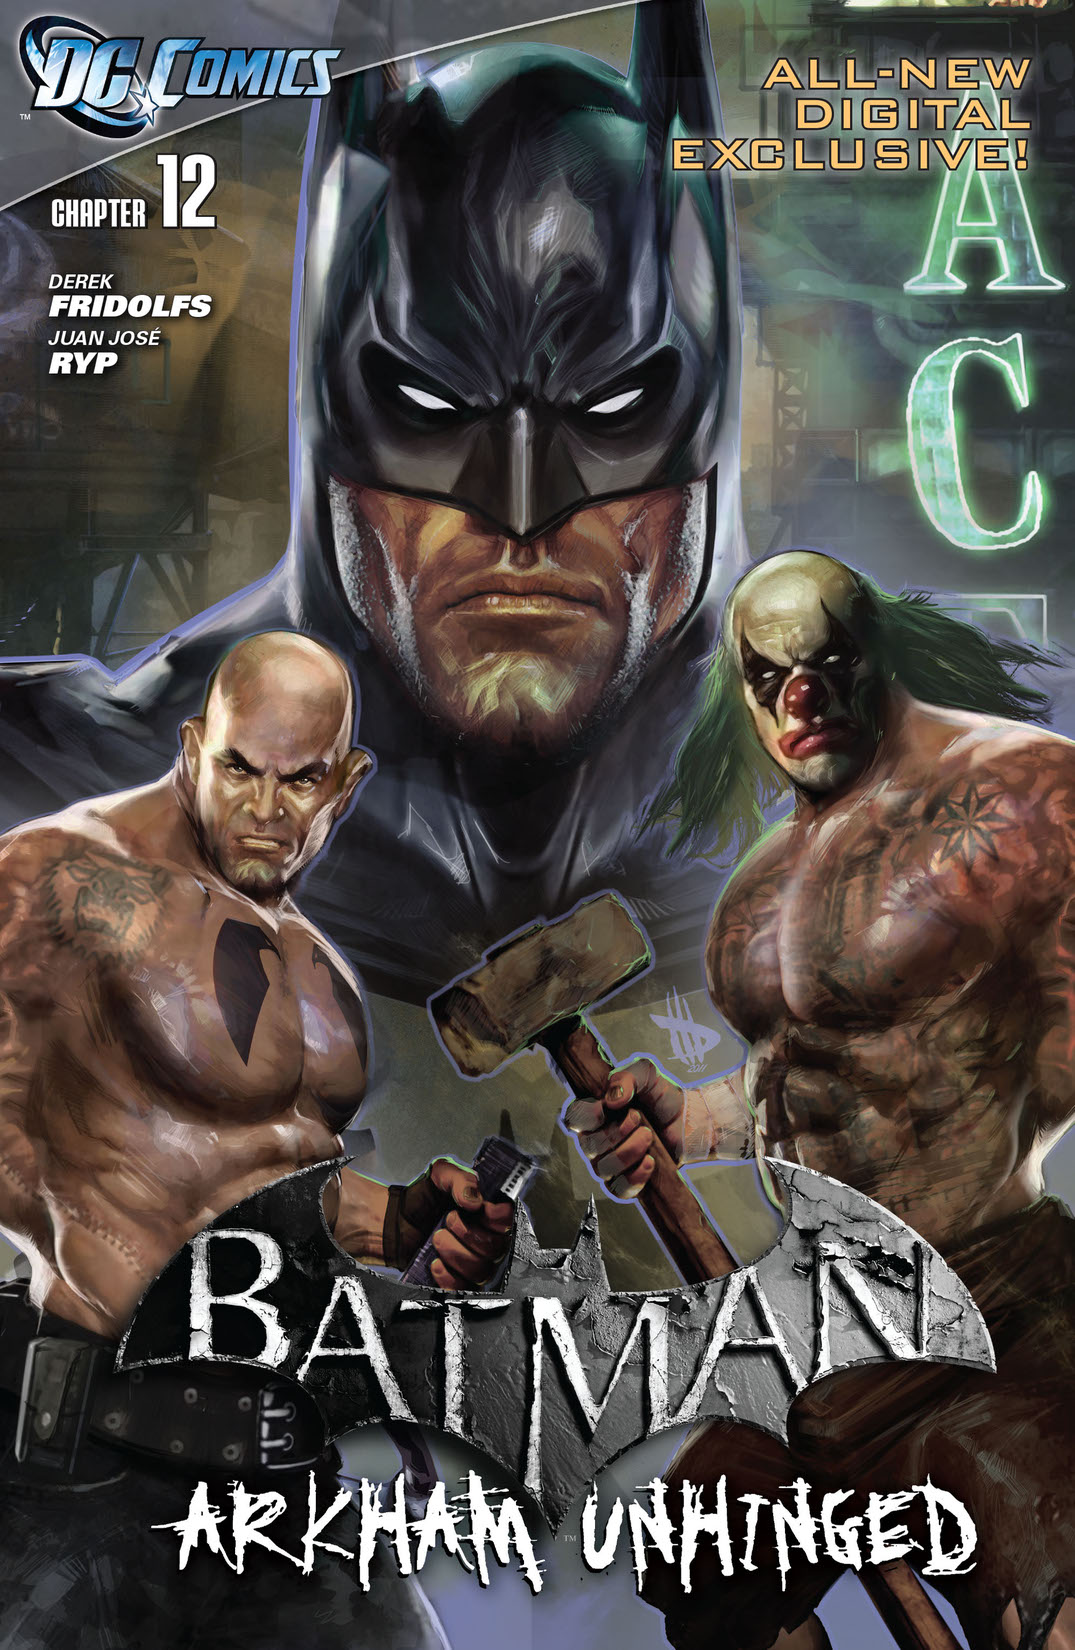 Batman: Arkham Unhinged #12 preview images